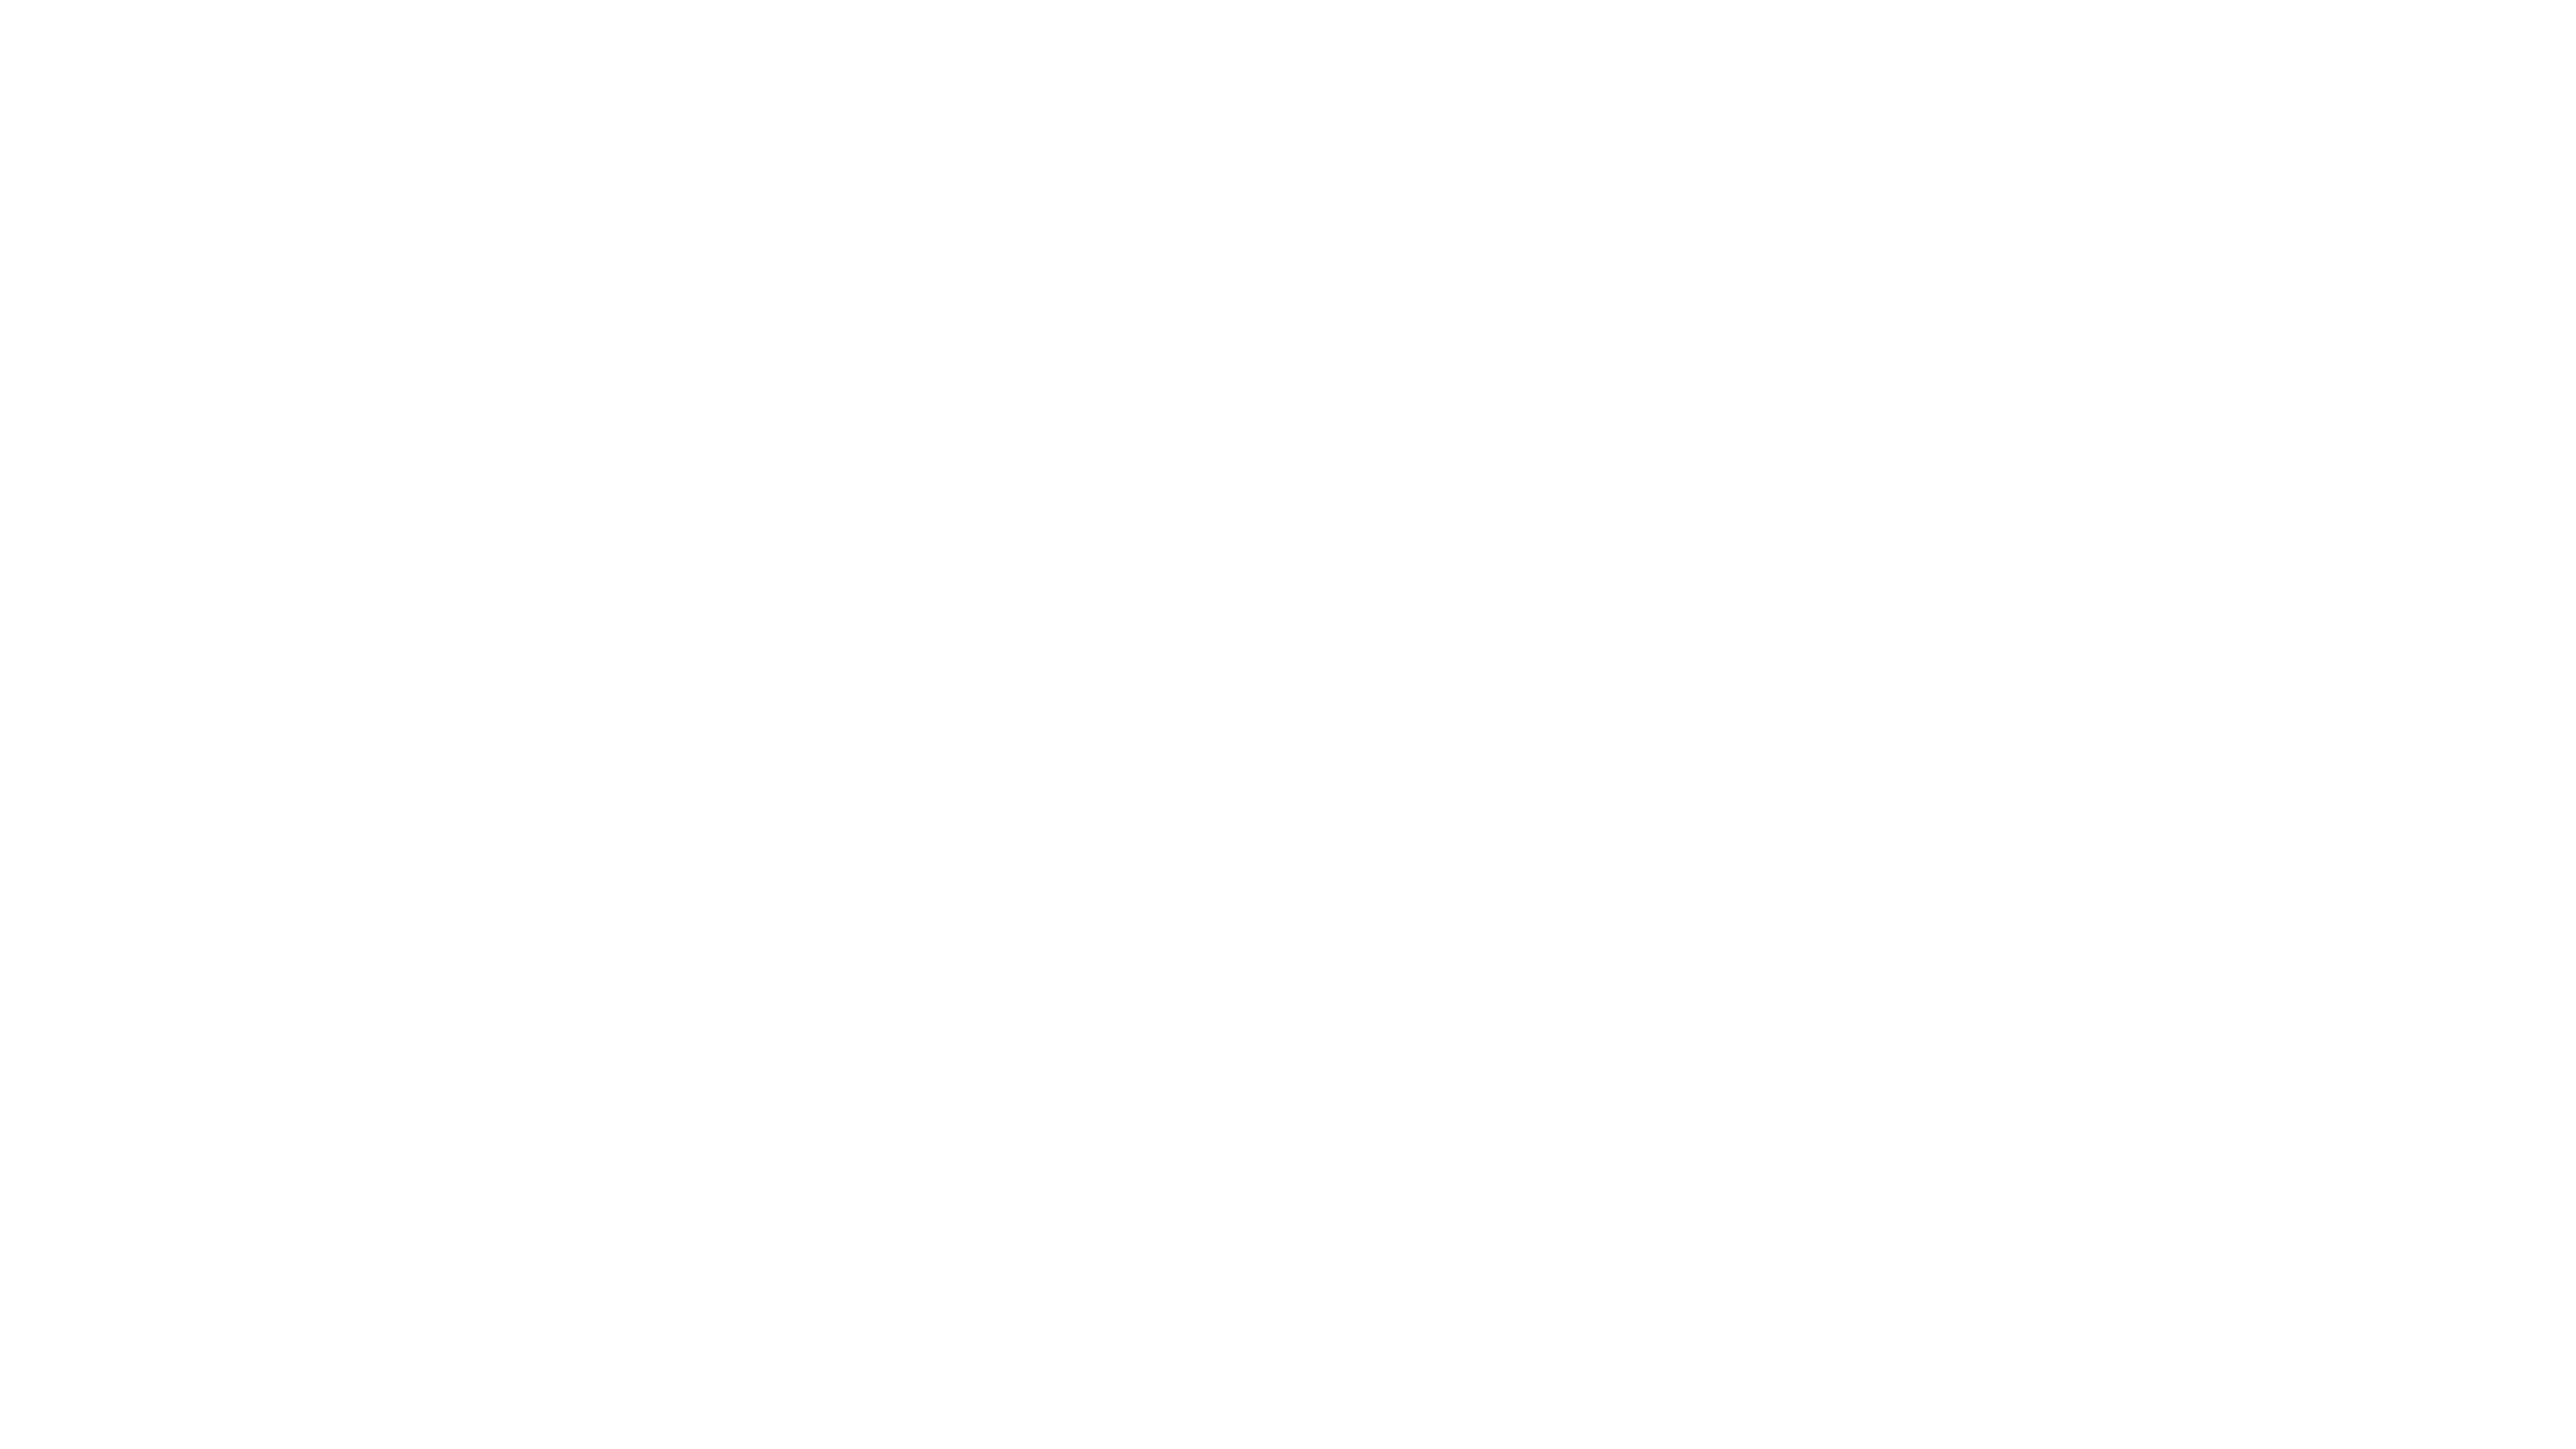 Chi ha ucciso Meredith Kercher?